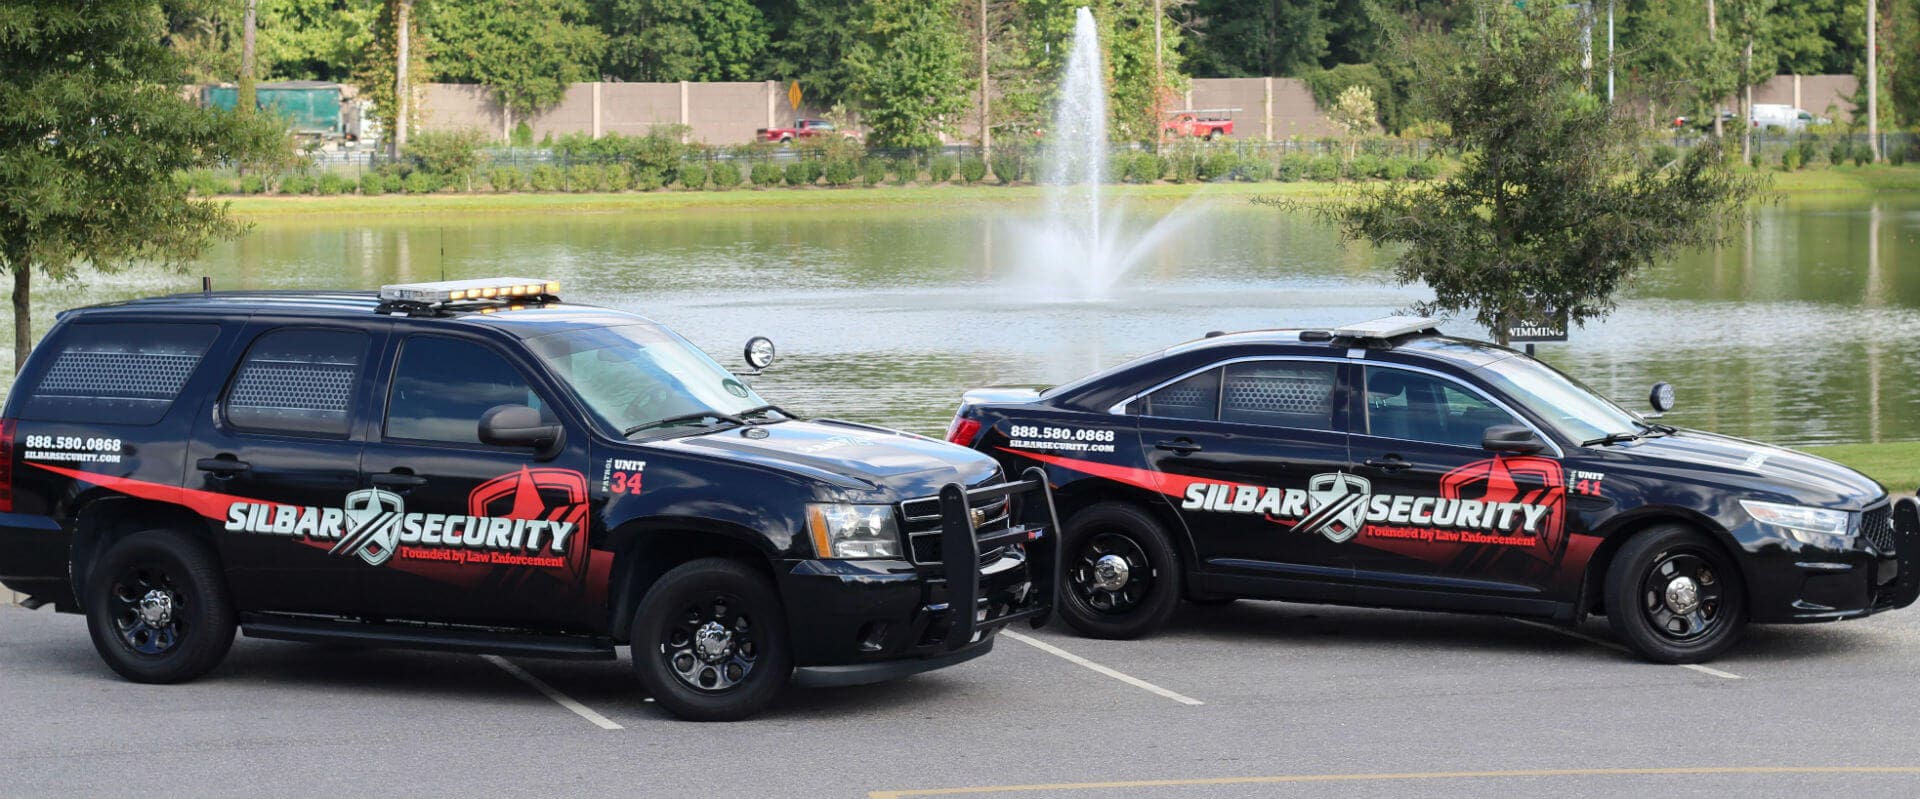 Silbar Security Vehicles, patrol security